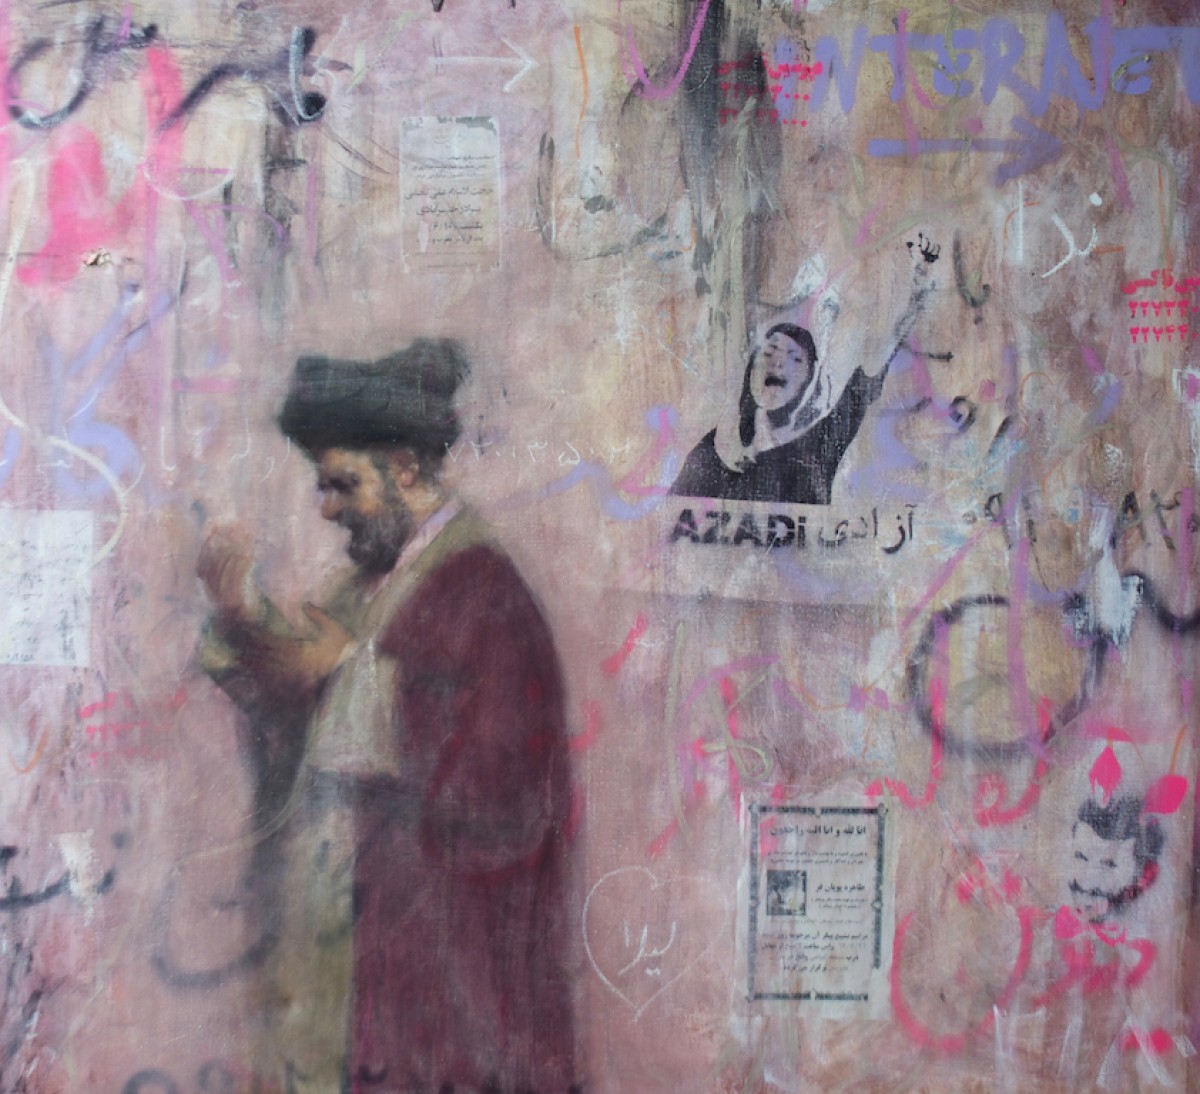 Darvish Fakhr 2014: Mullah against Pink Wall, aka Freedom, oil on linen, 151 x 173 cm